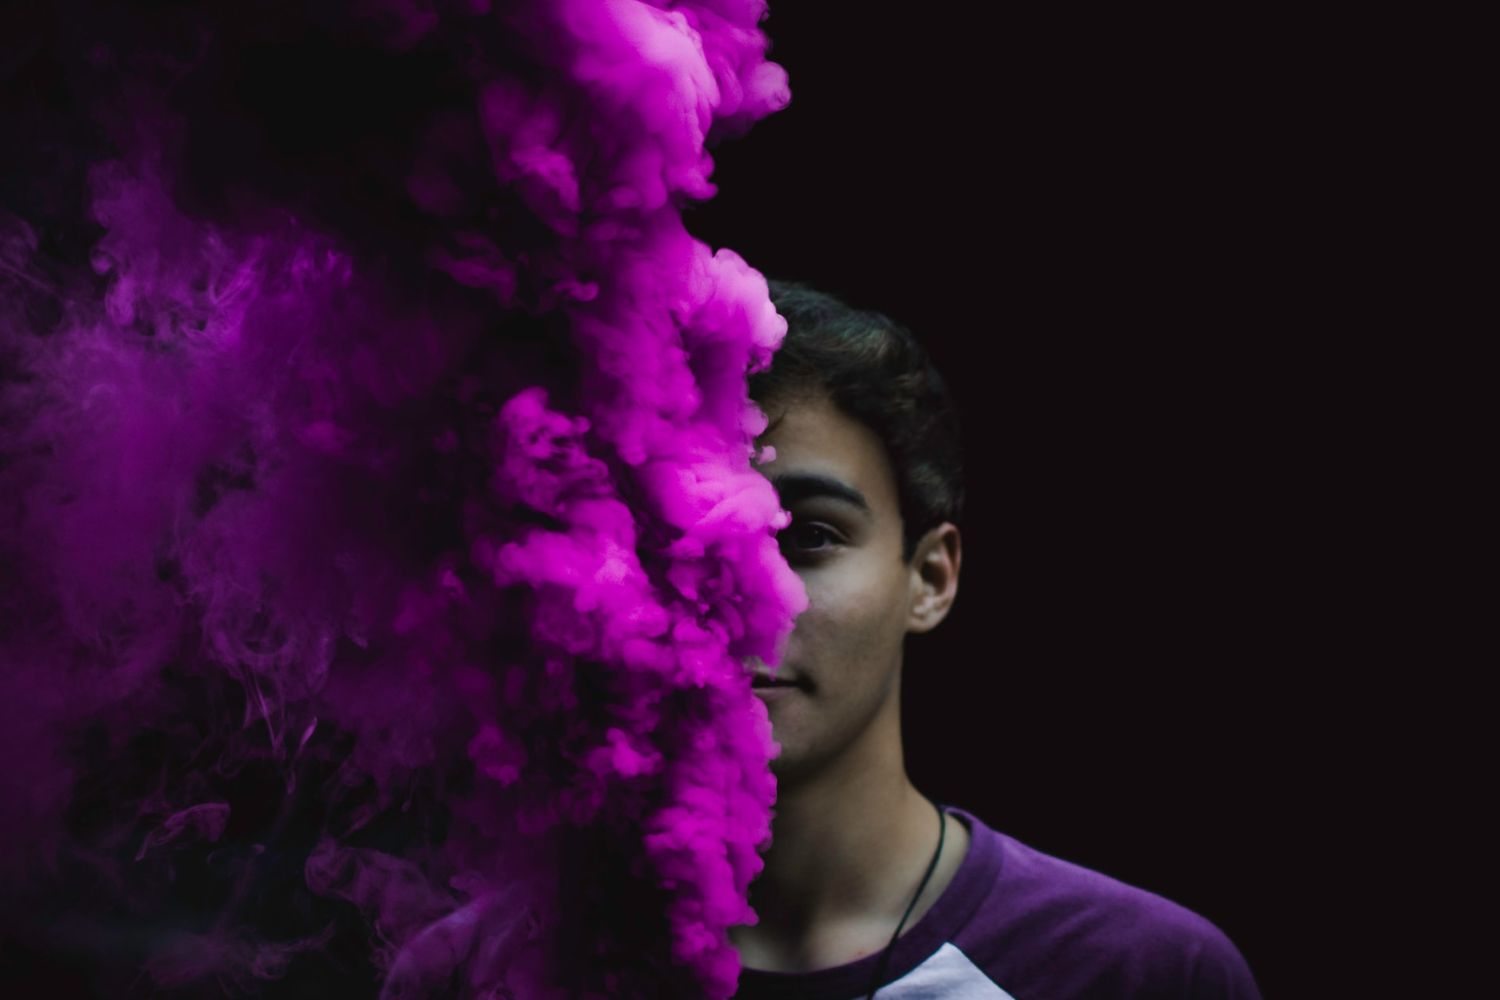 a  male portrait behind a purple smoke bomb